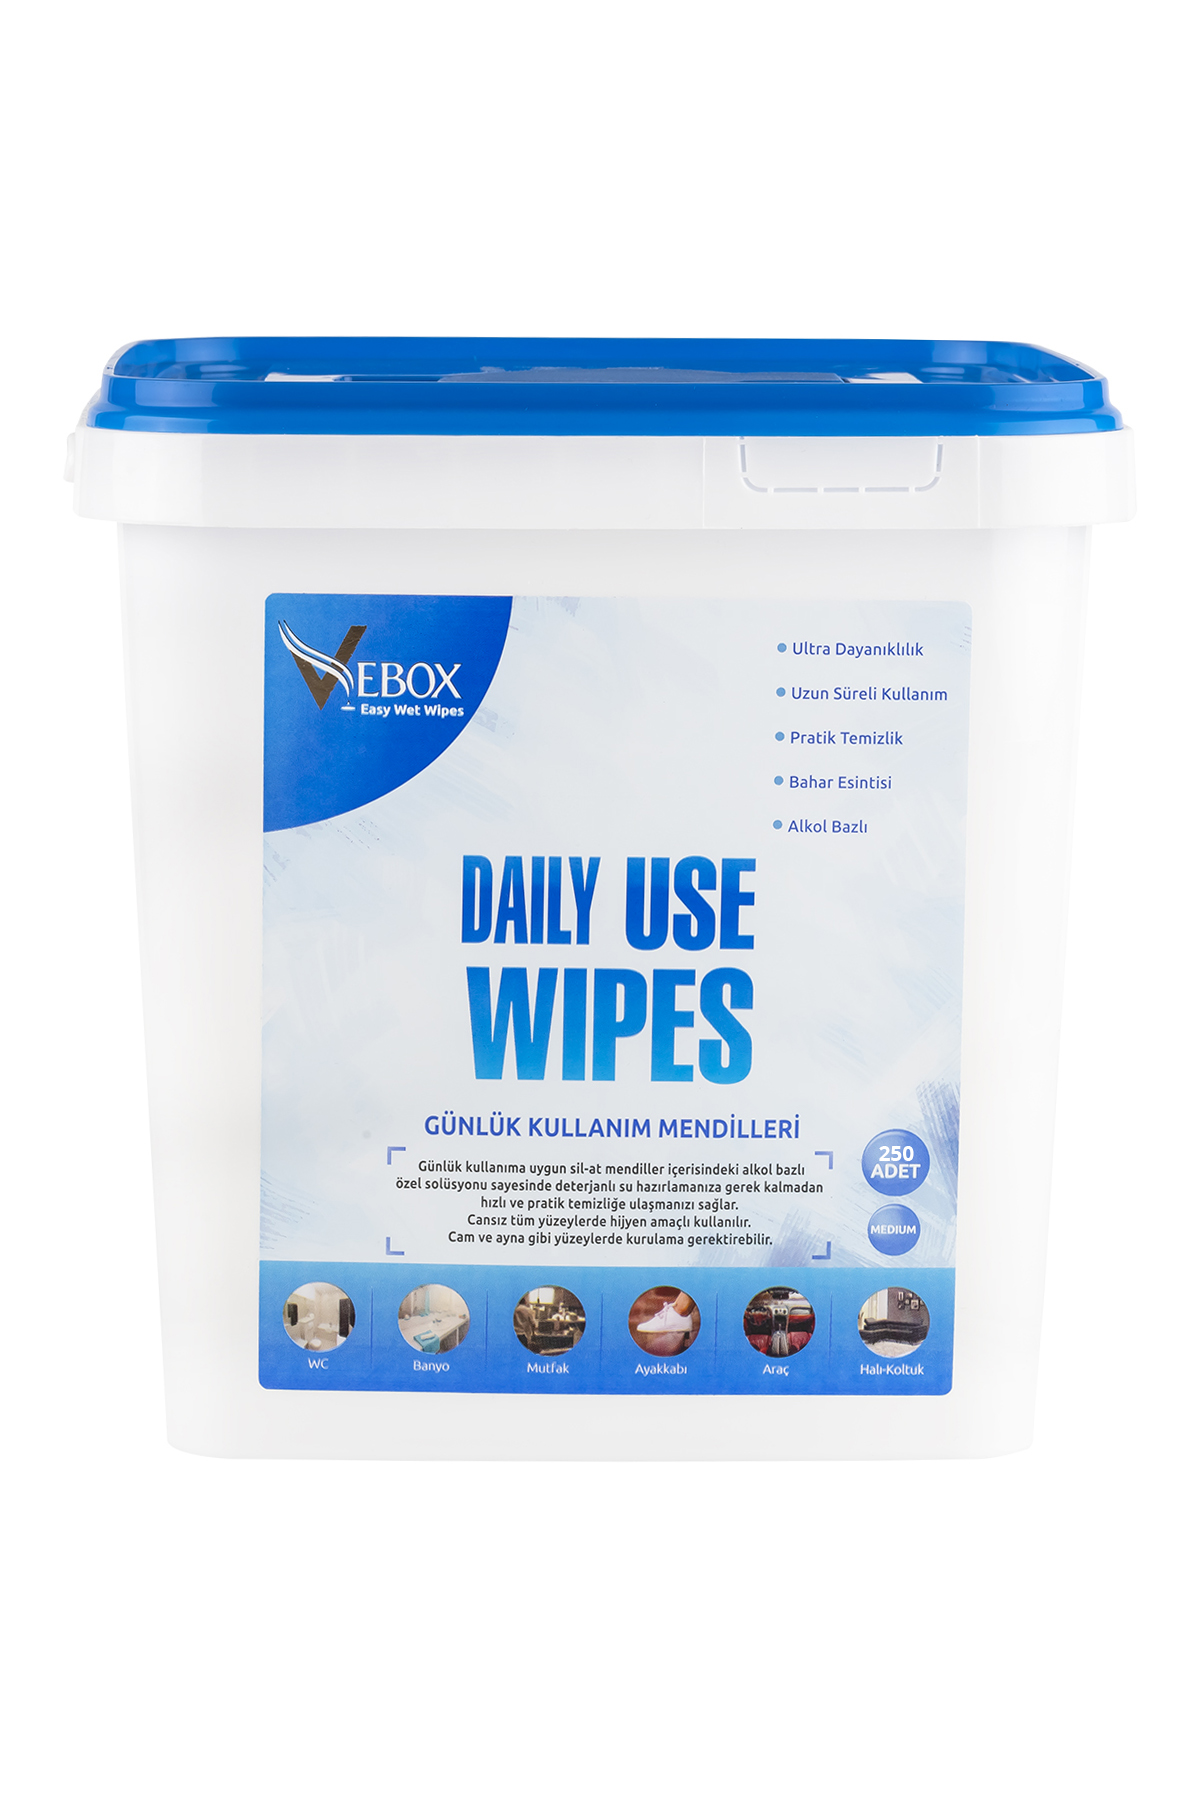 Vebox Daily Use Wipes Günlük Kullanım Mendilleri Kova 250 Adet